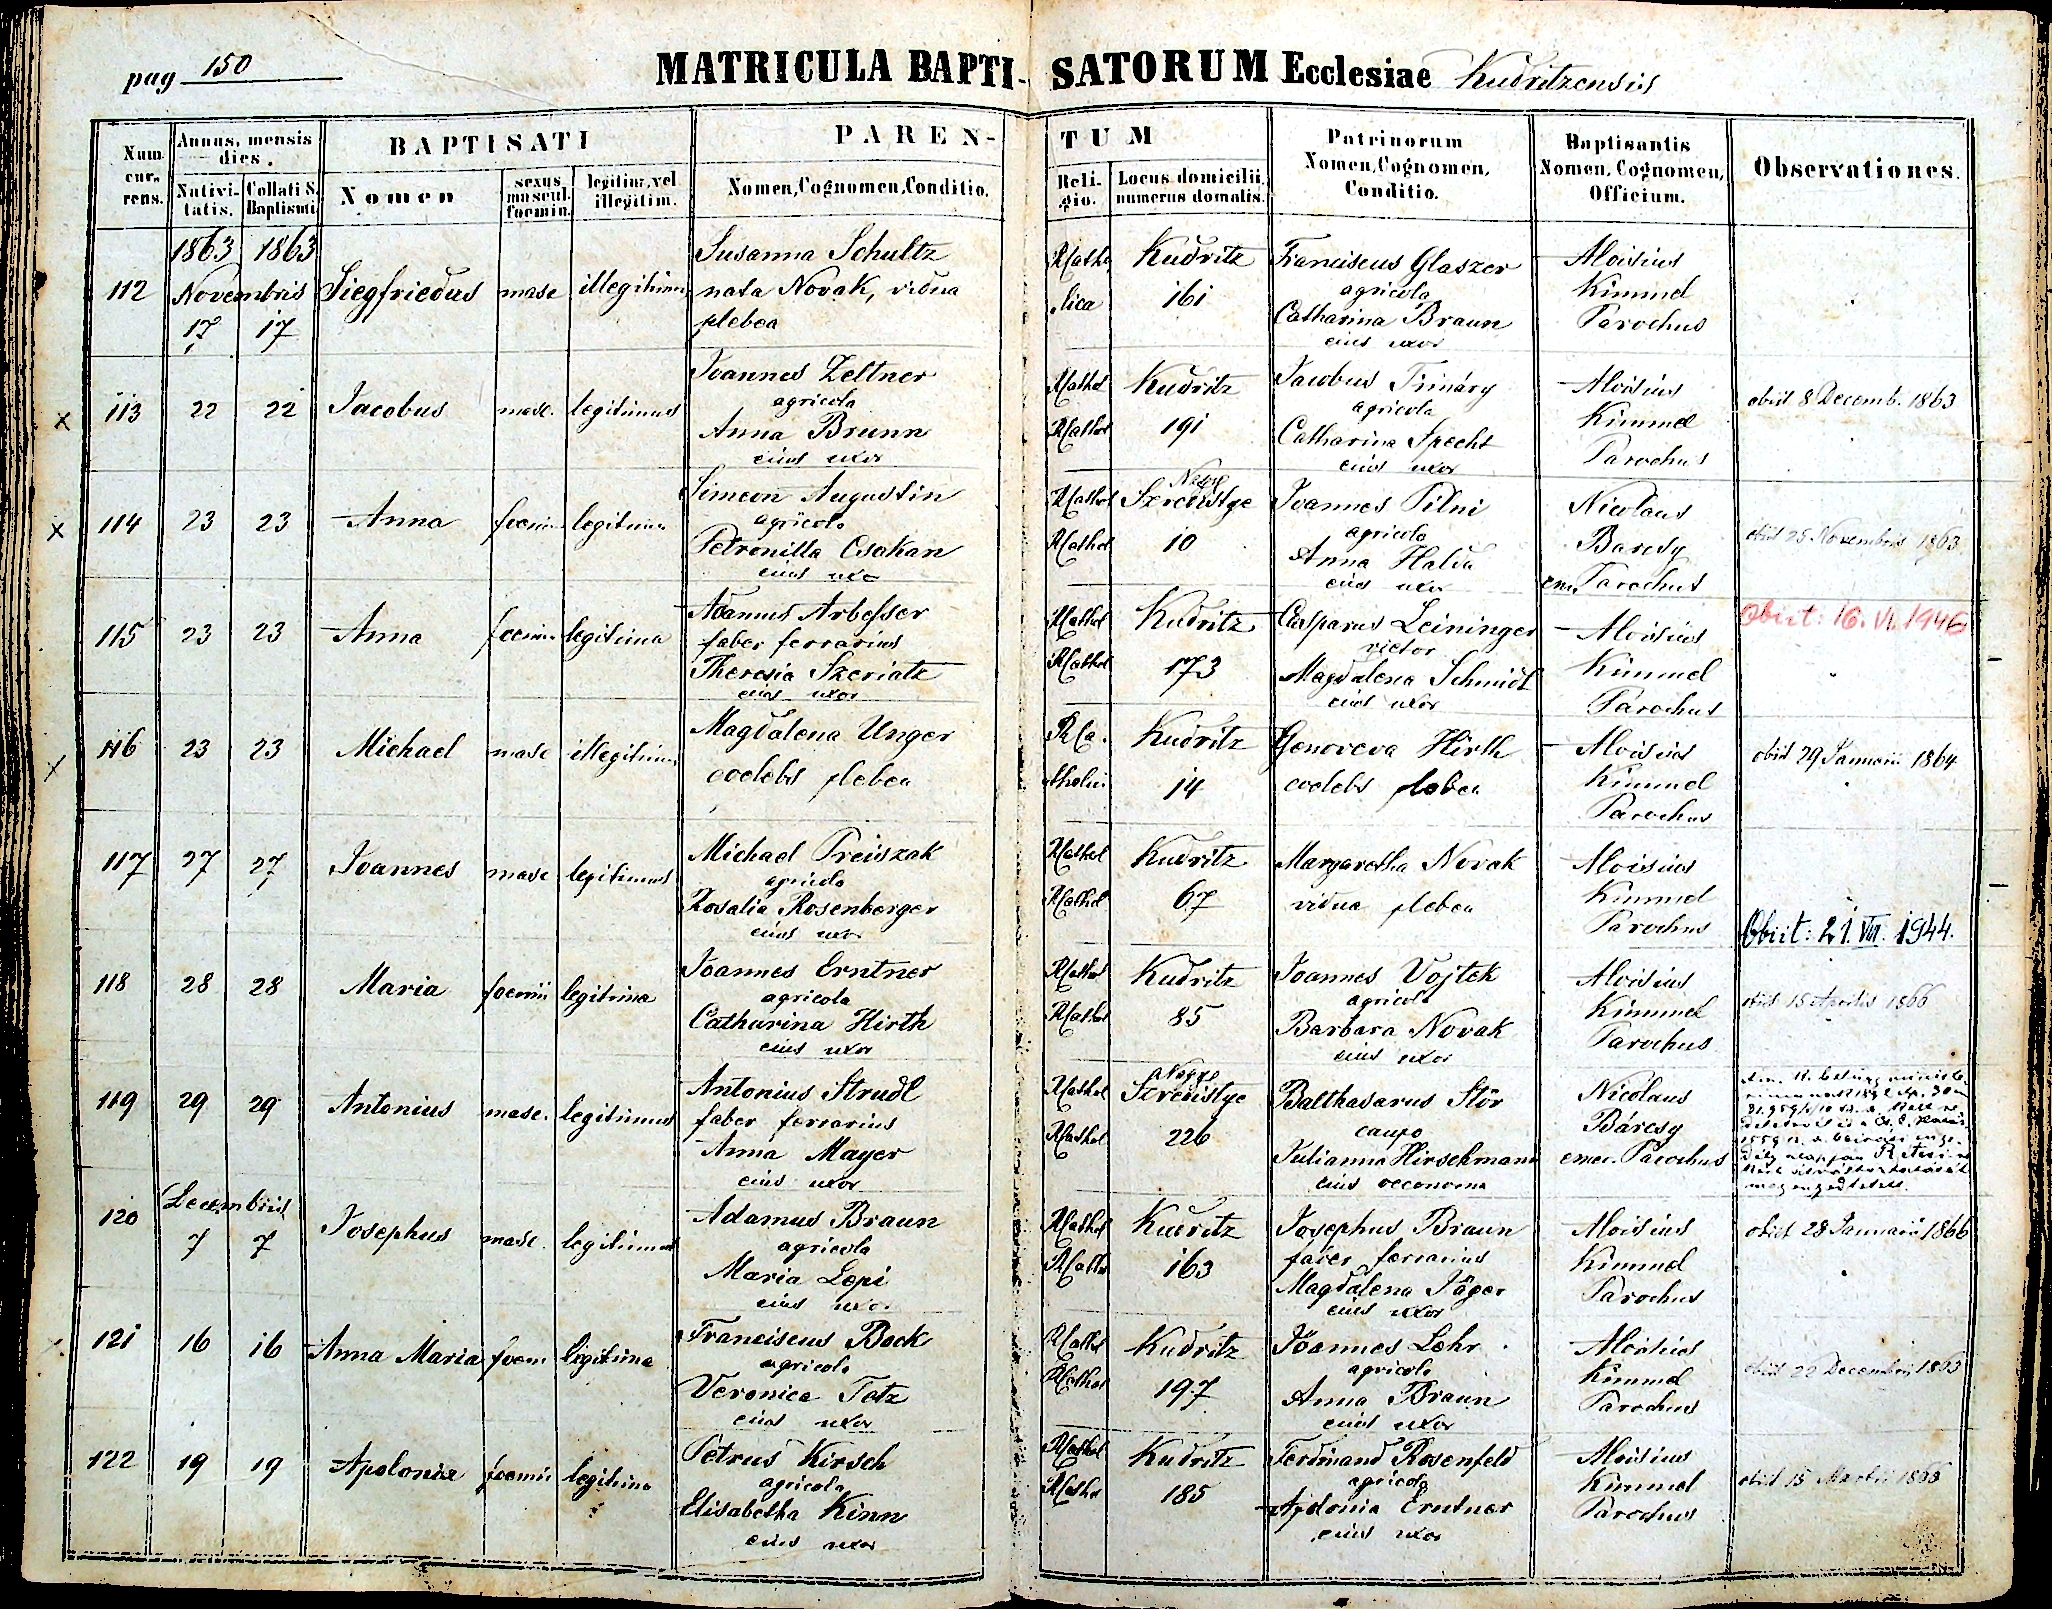 images/church_records/BIRTHS/1852-1870B/150